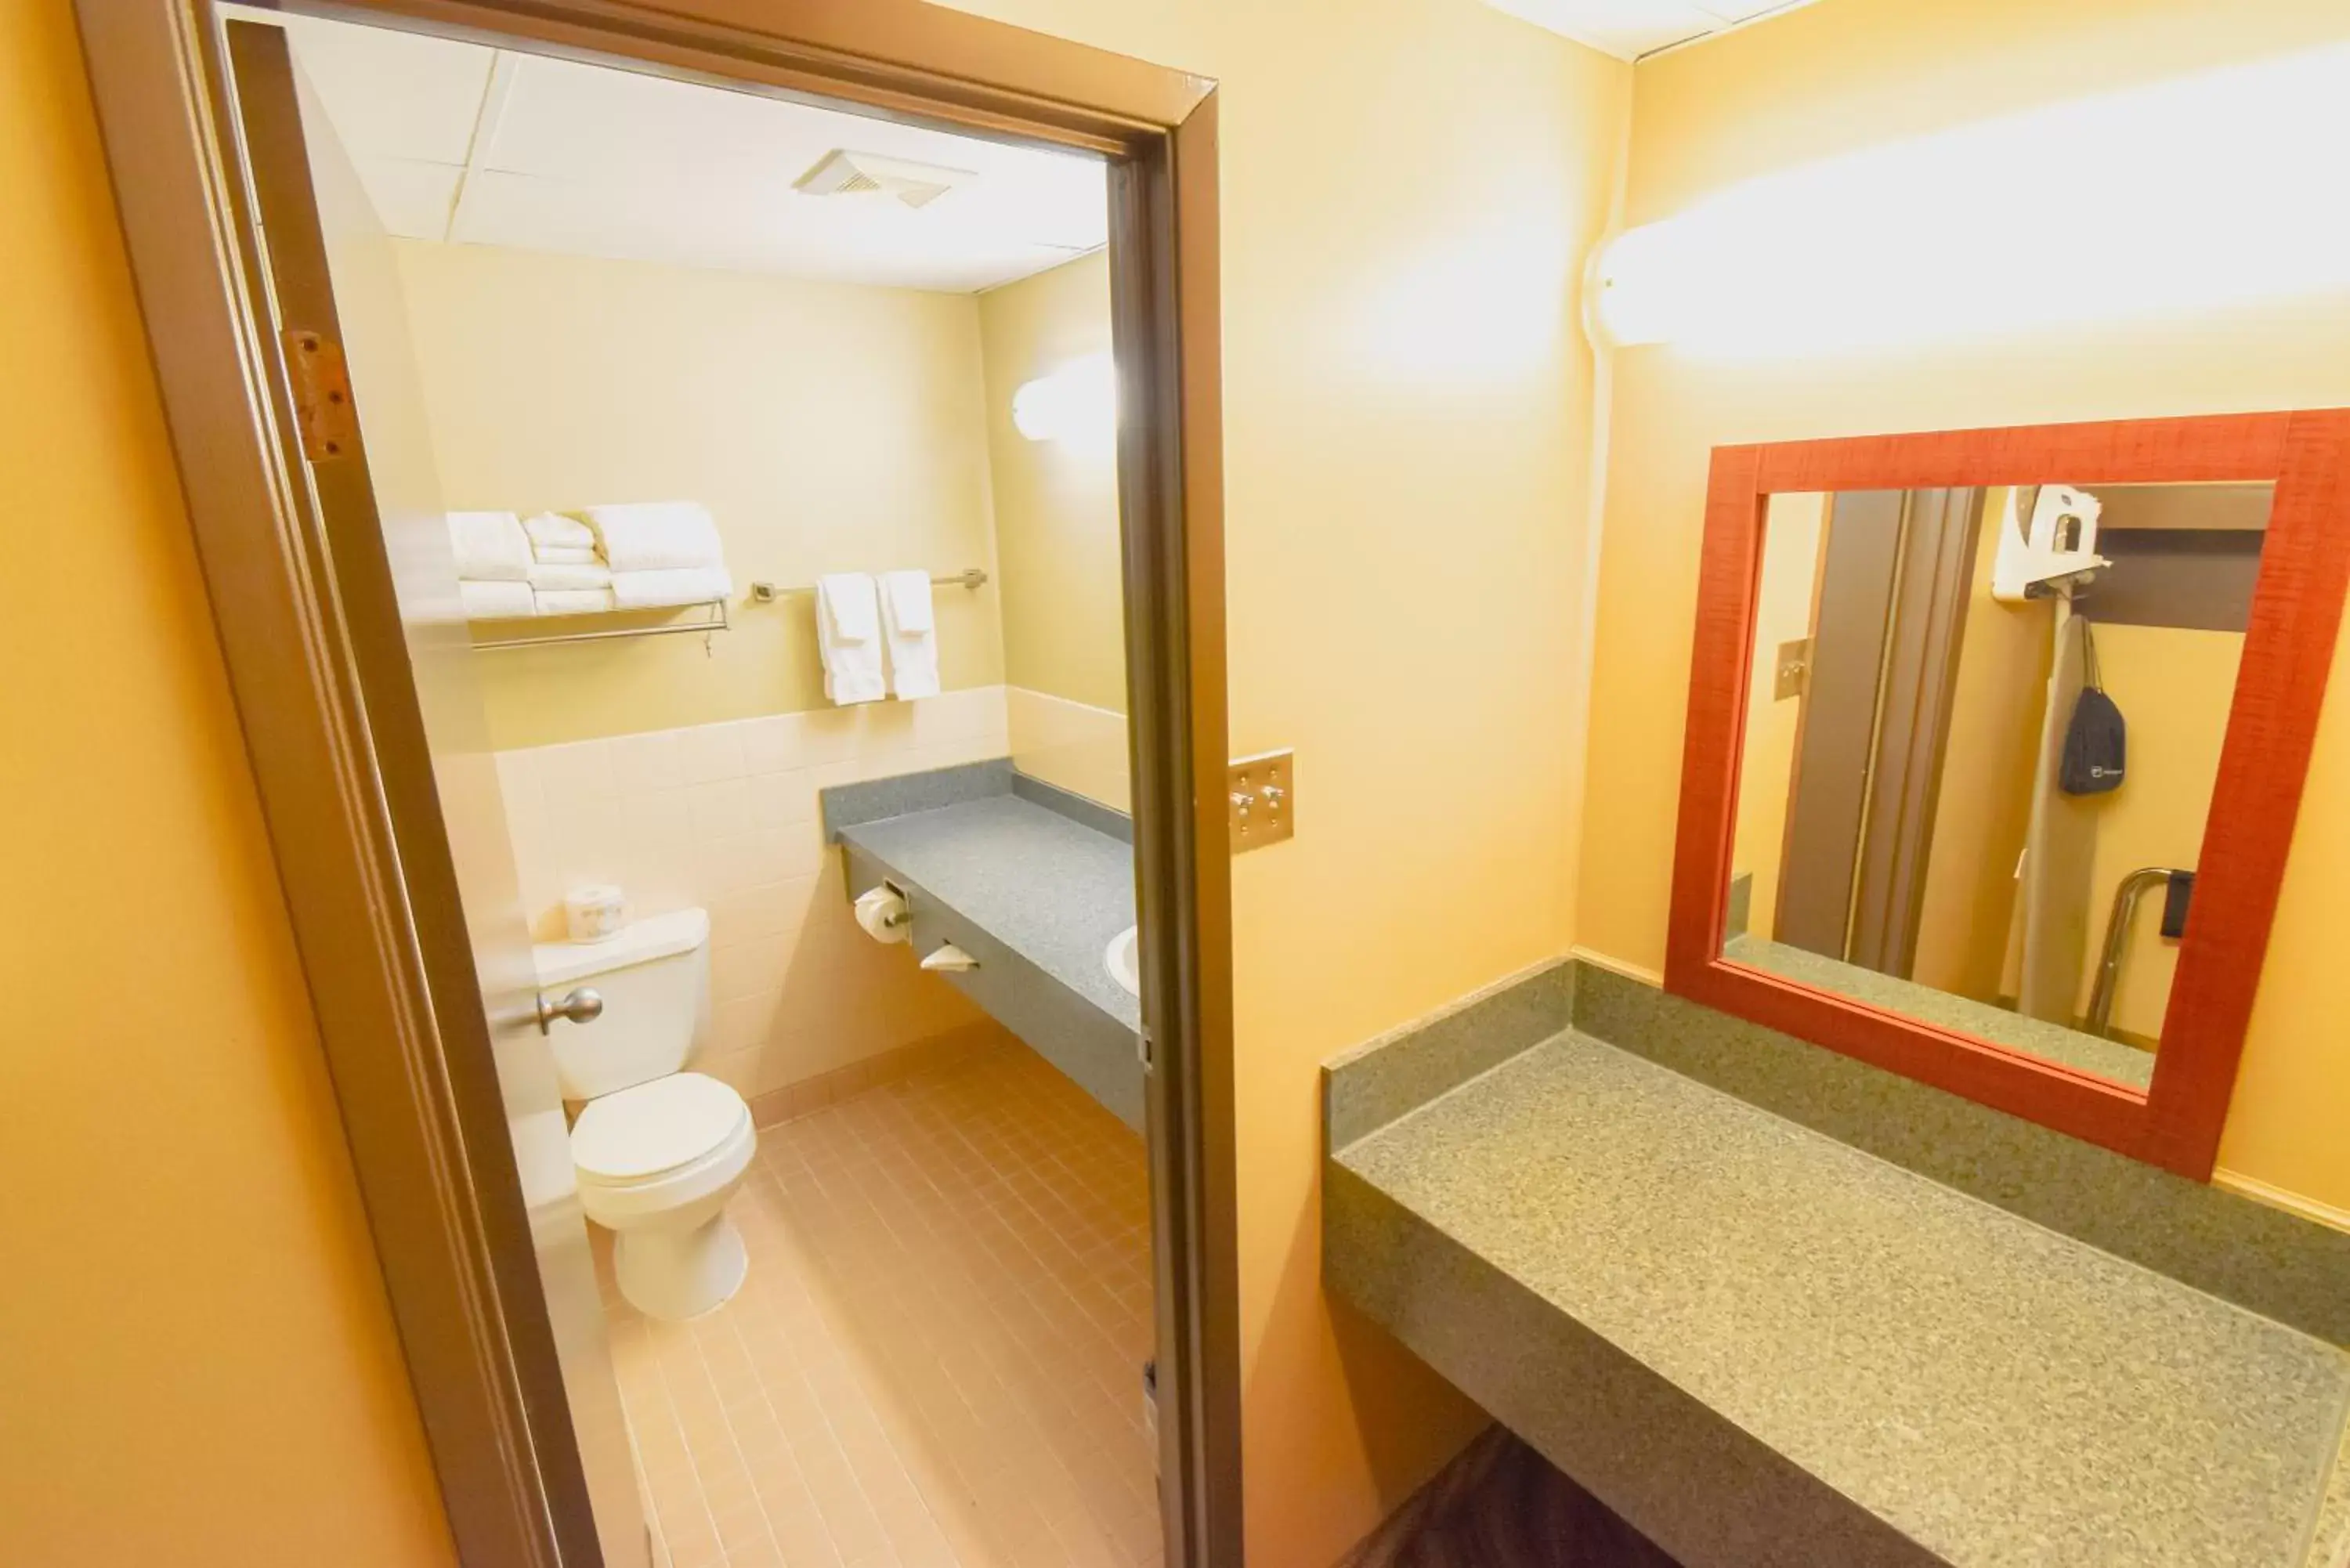 Bathroom in Canad Inns Destination Centre Garden City